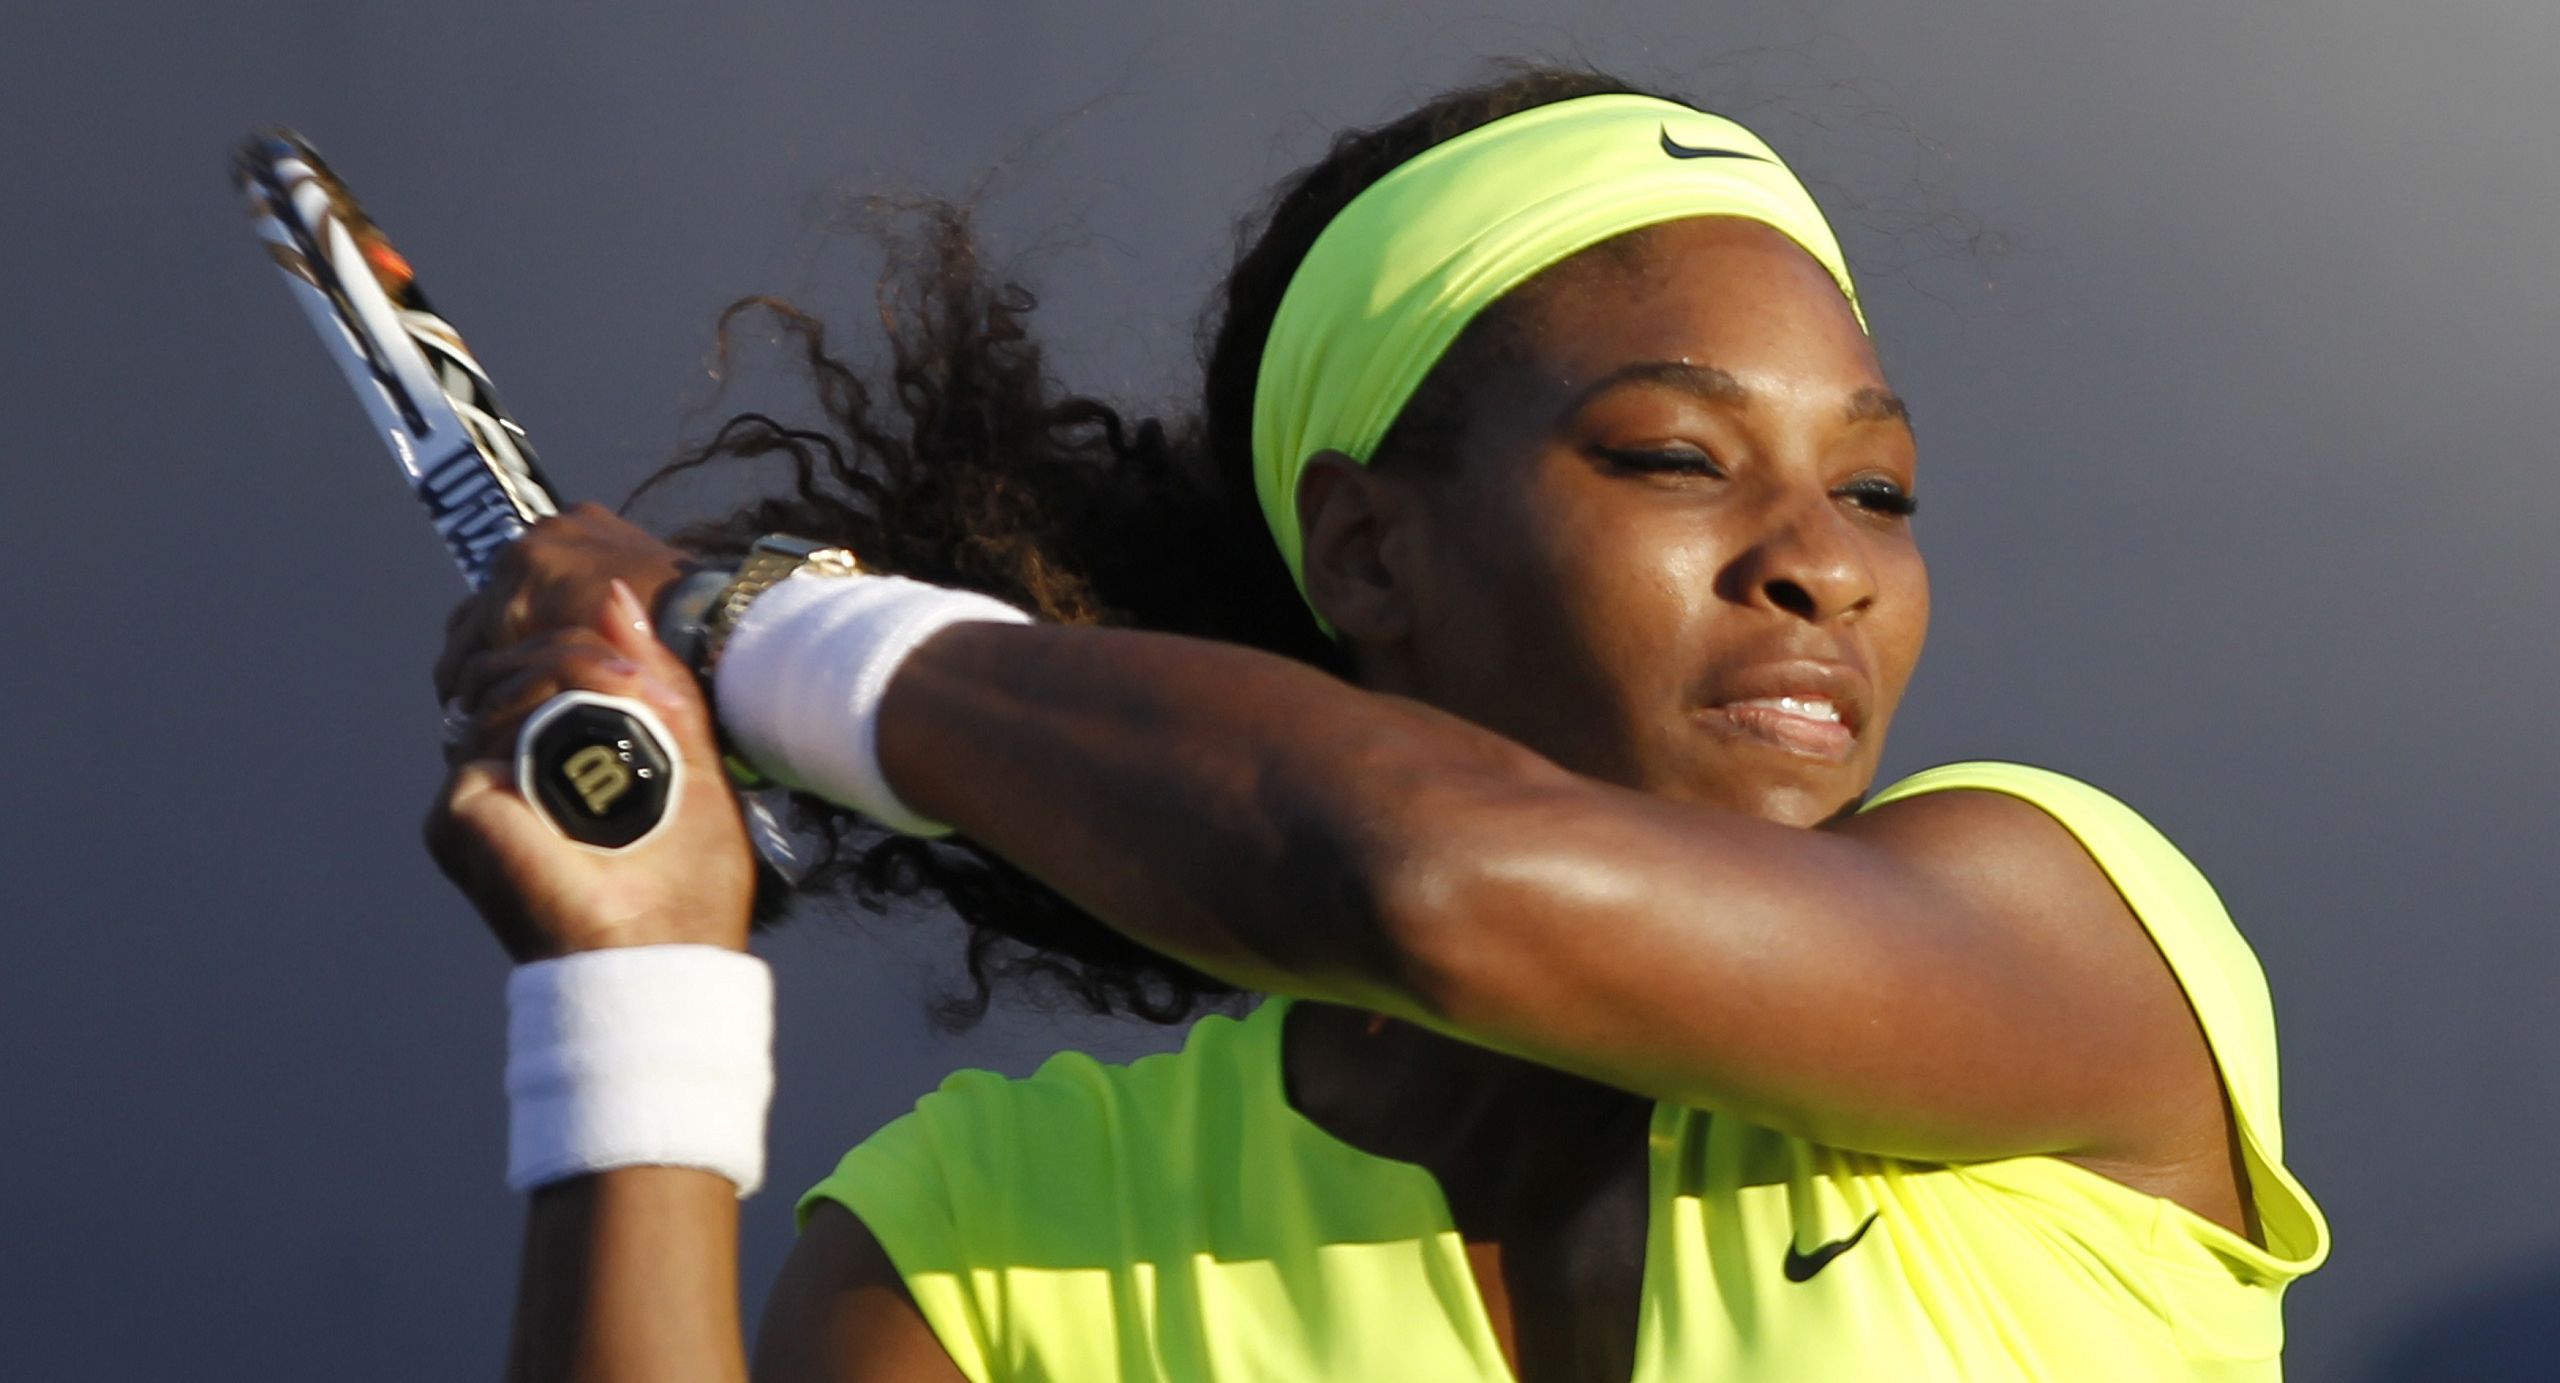 Serena Williams HD Wallpaper